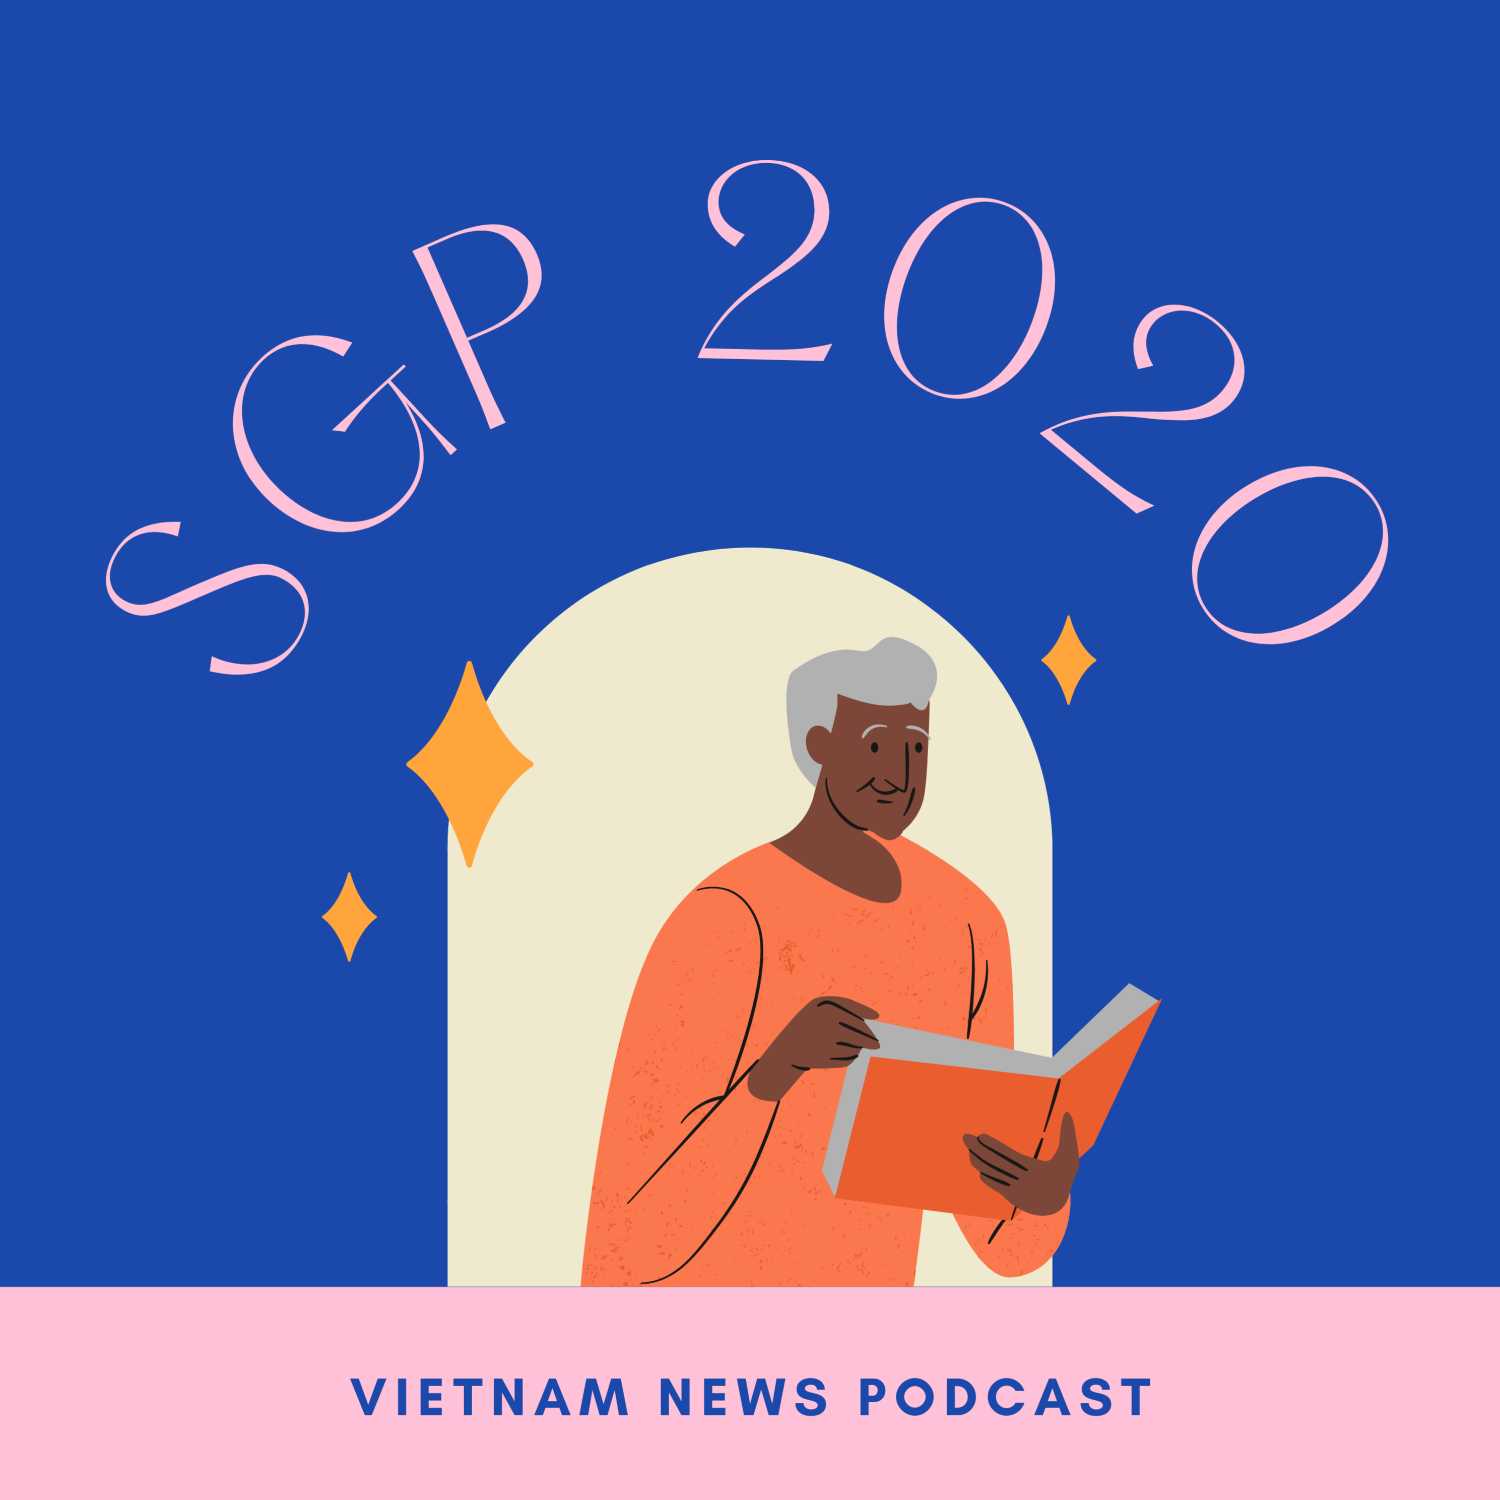 SGP2020 Podcast